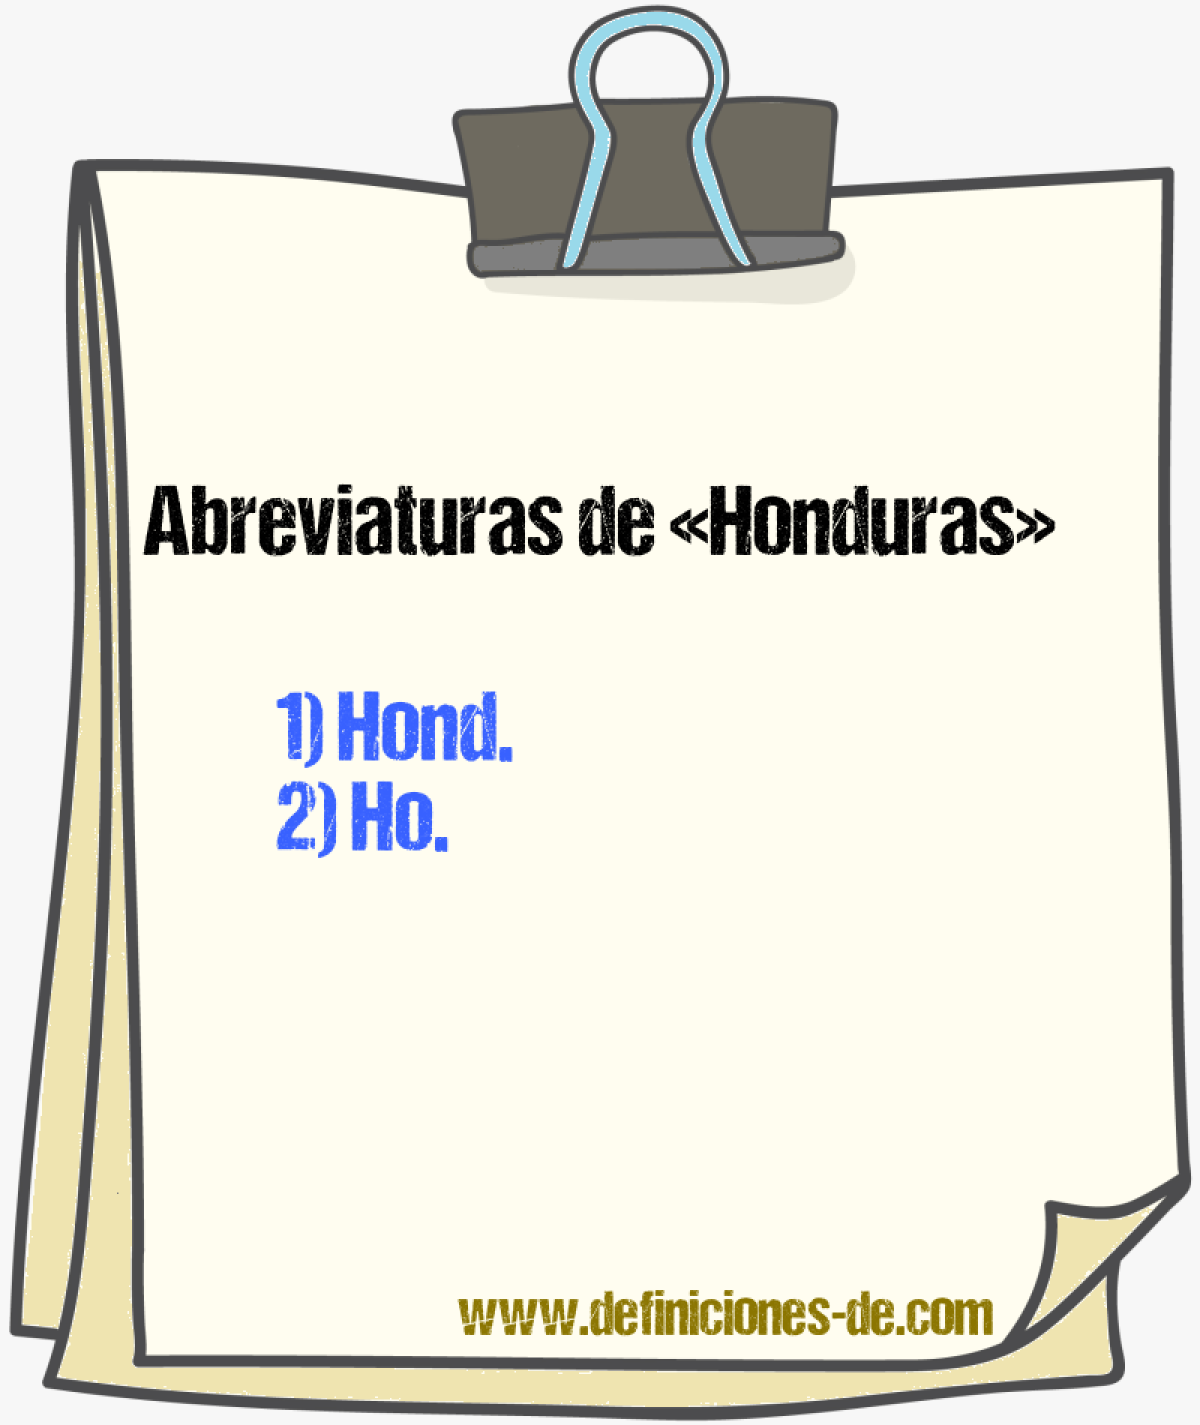 Abreviaturas de Honduras